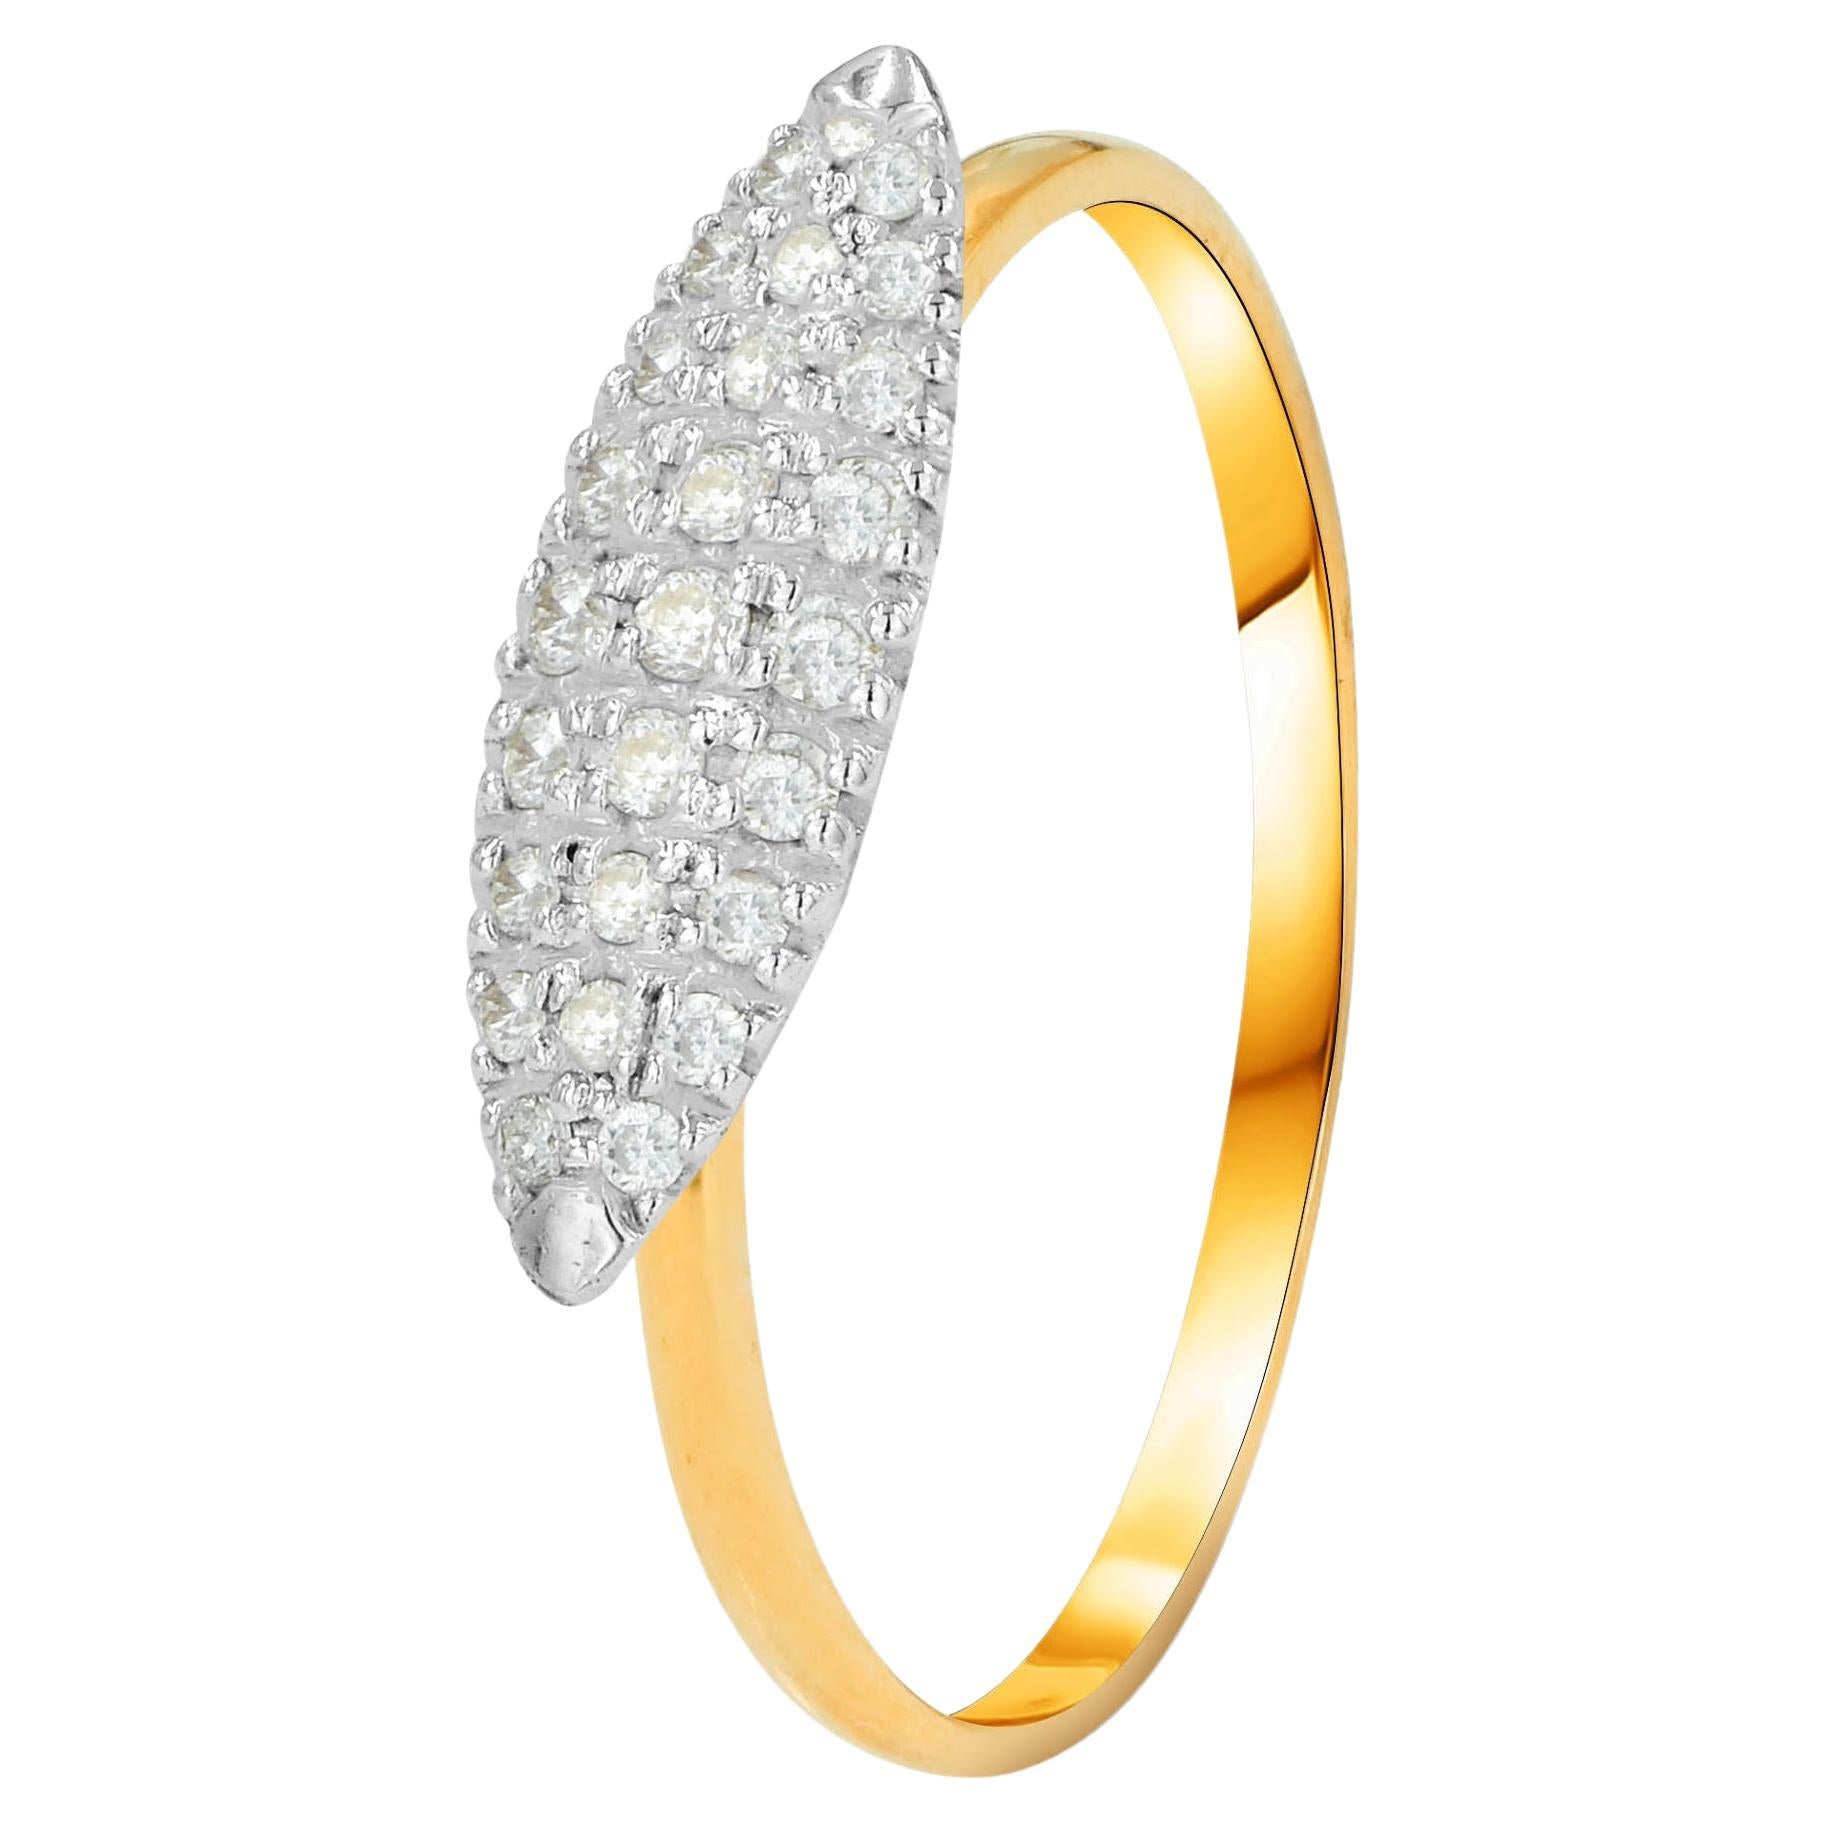 For Sale:  14K Gold 0.23 Carat Diamond Cluster Engagement Ring